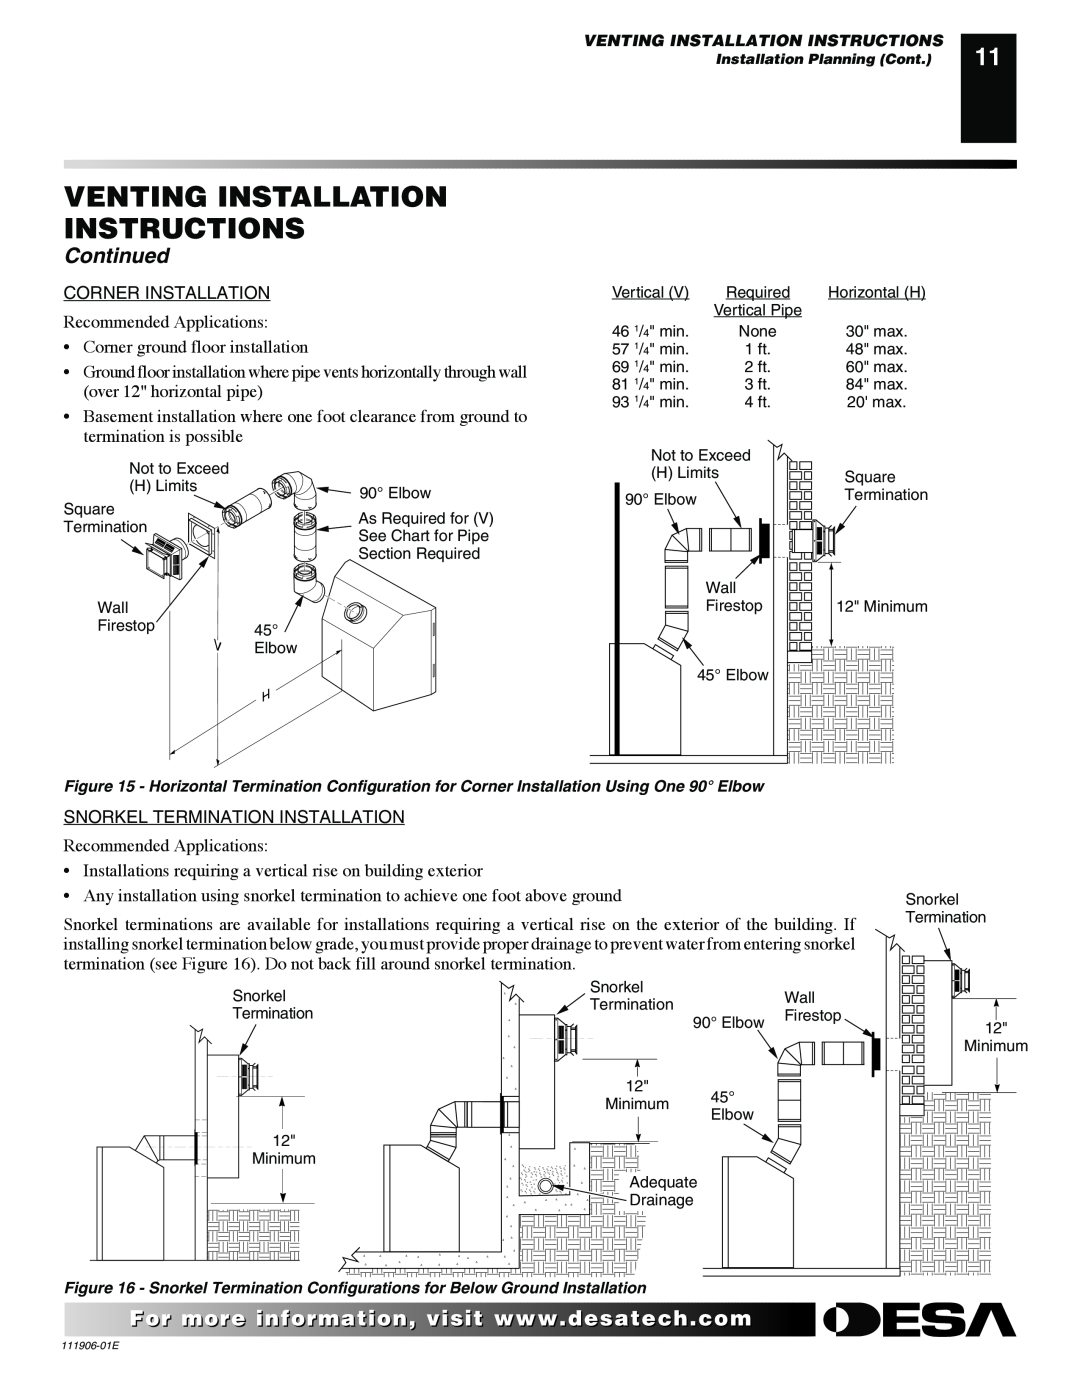 Desa V42P-A Venting Installation Instructions, Continued, Corner Installation, Snorkel Termination Installation, Required 